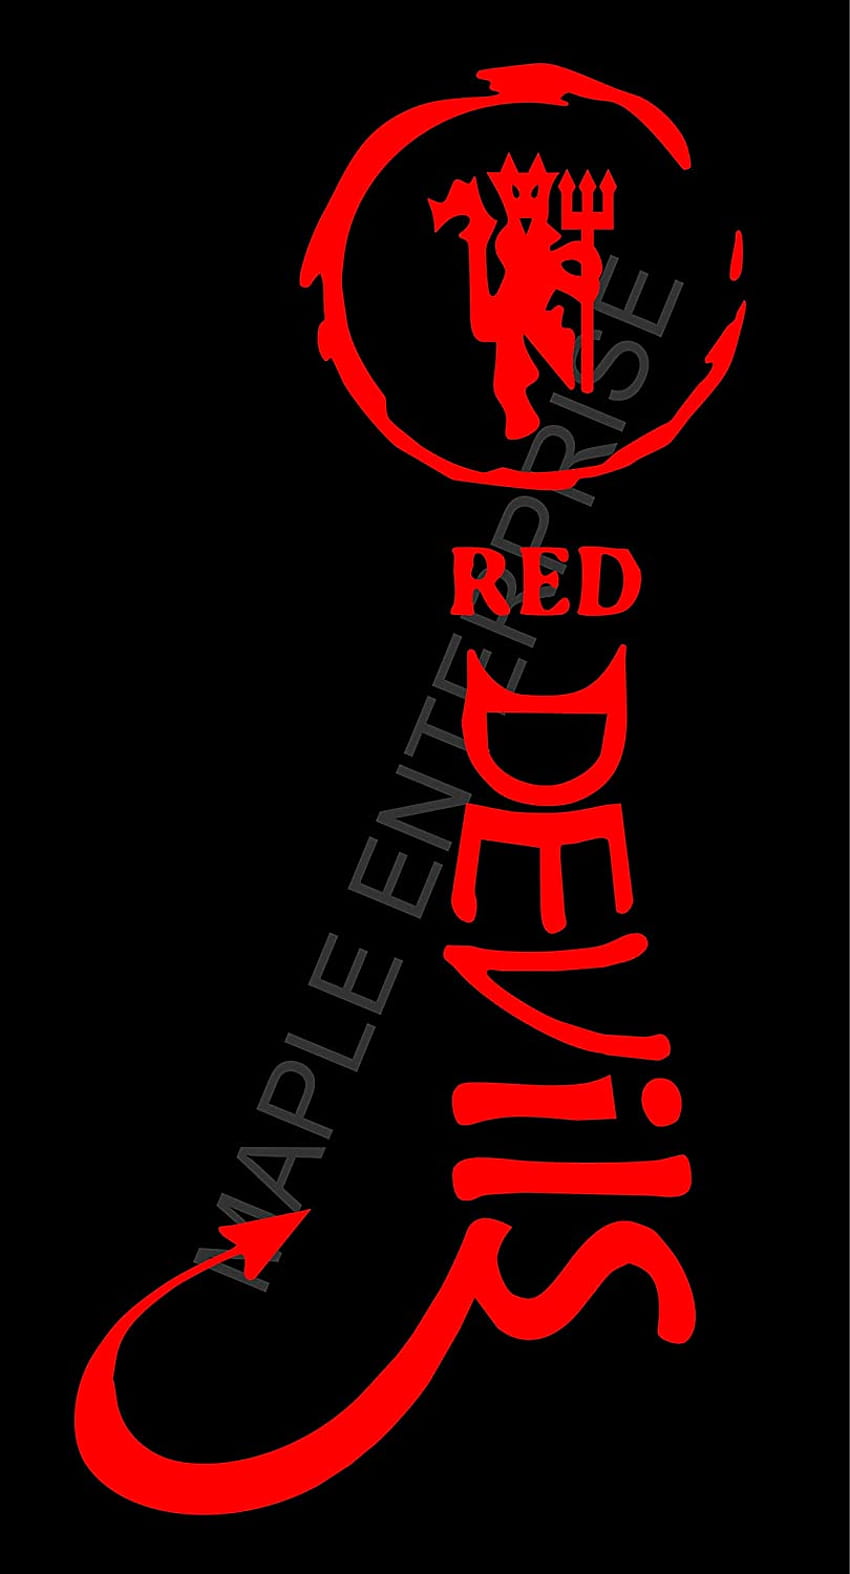 Manchester United Football Club RED Devils Logo Vinyl Decal Sticker untuk hiasan dinding kap mobil, logo manchester united wallpaper ponsel HD